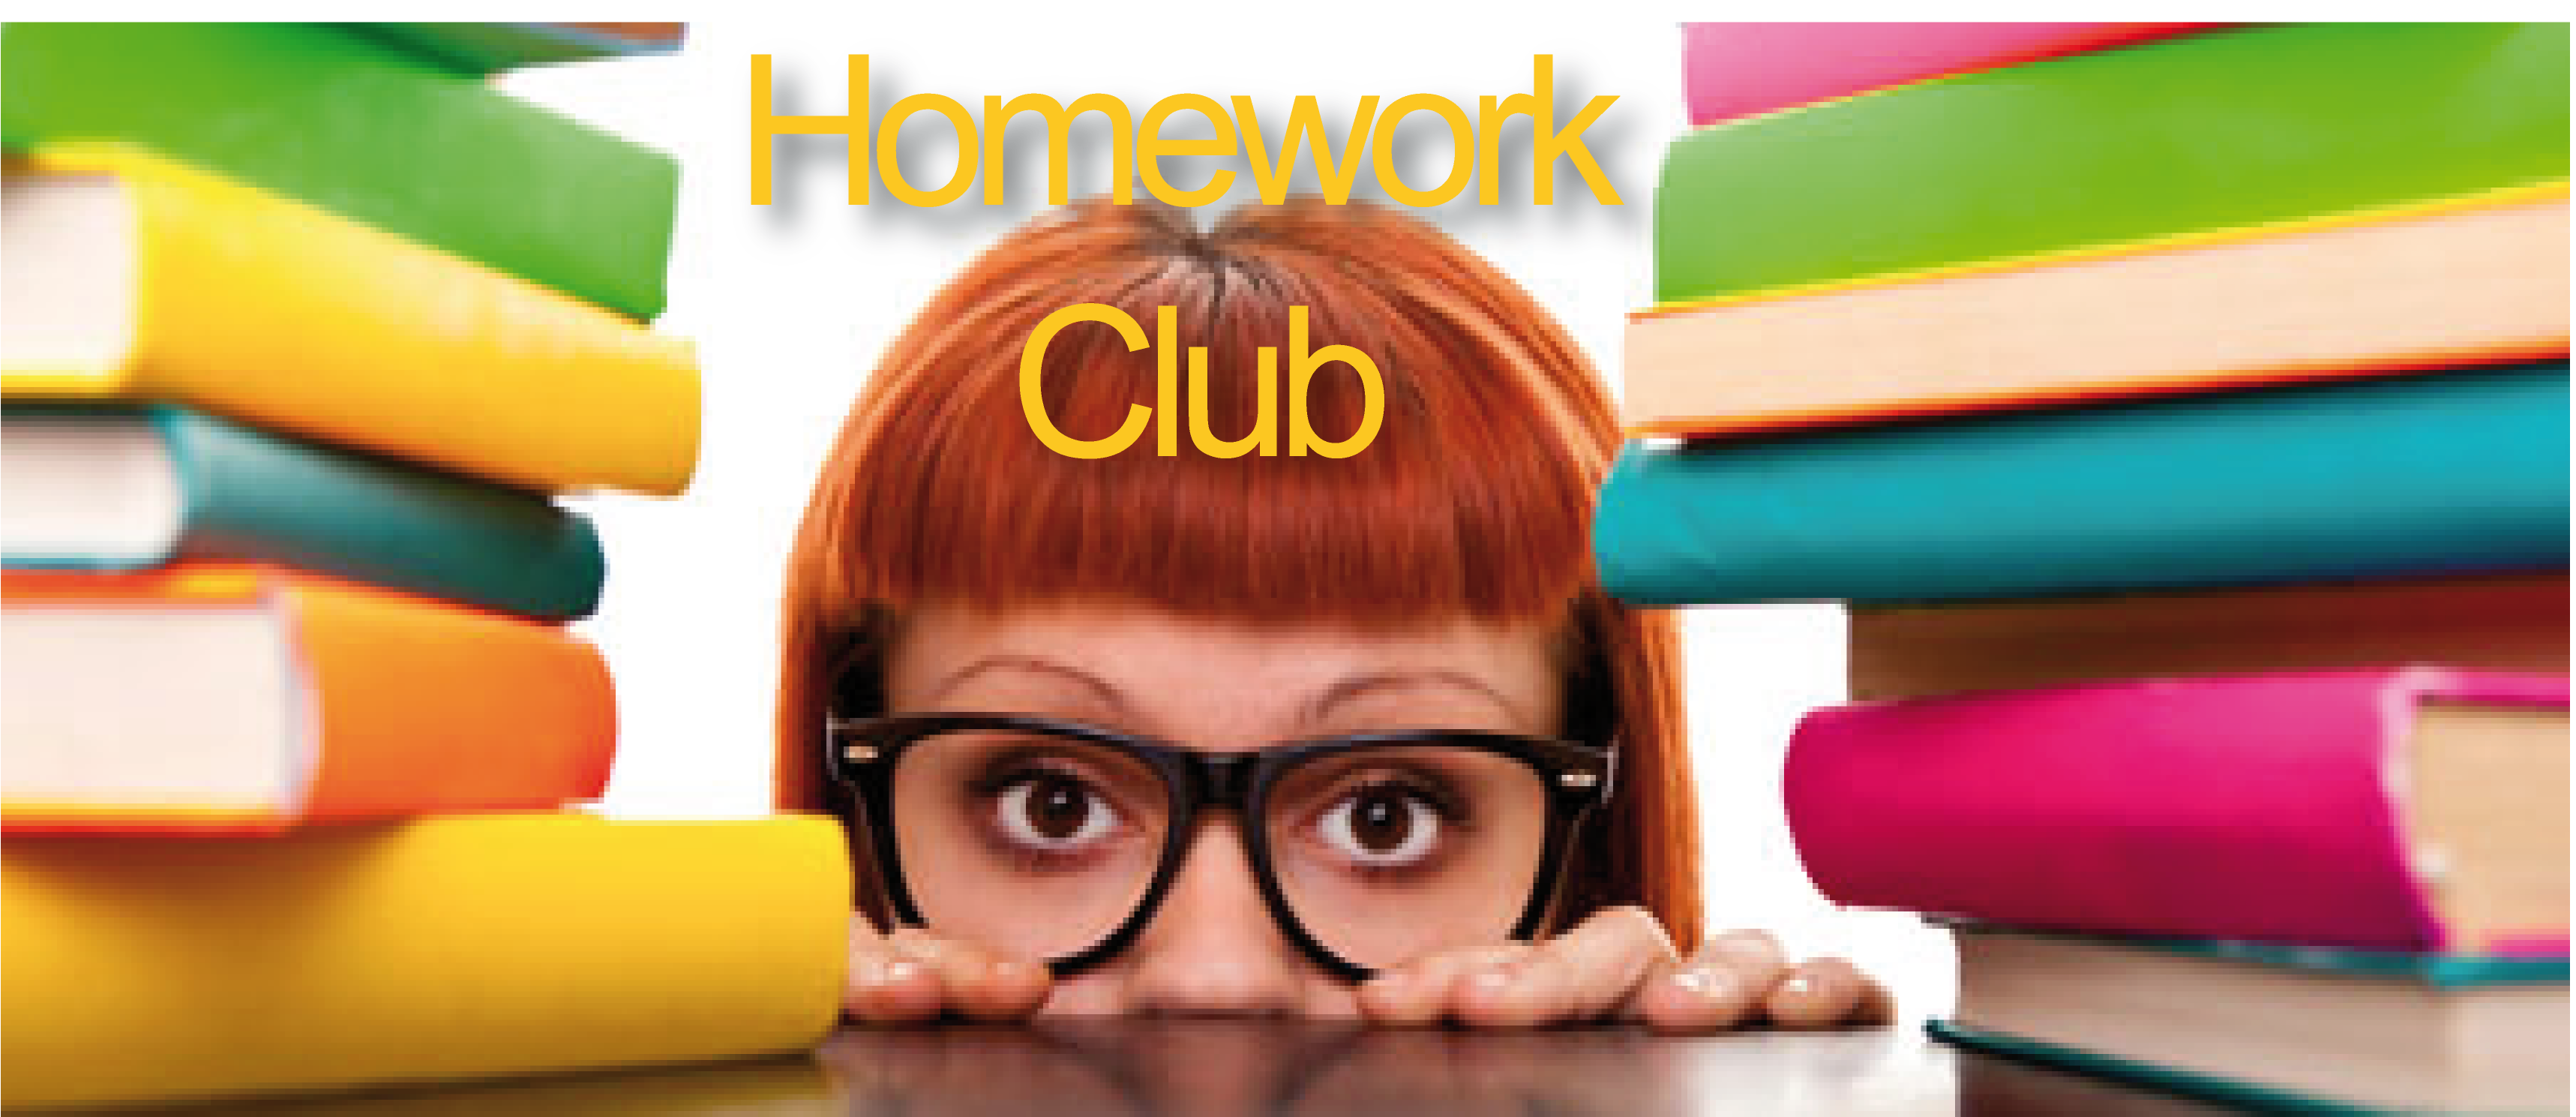 purpose of homework club